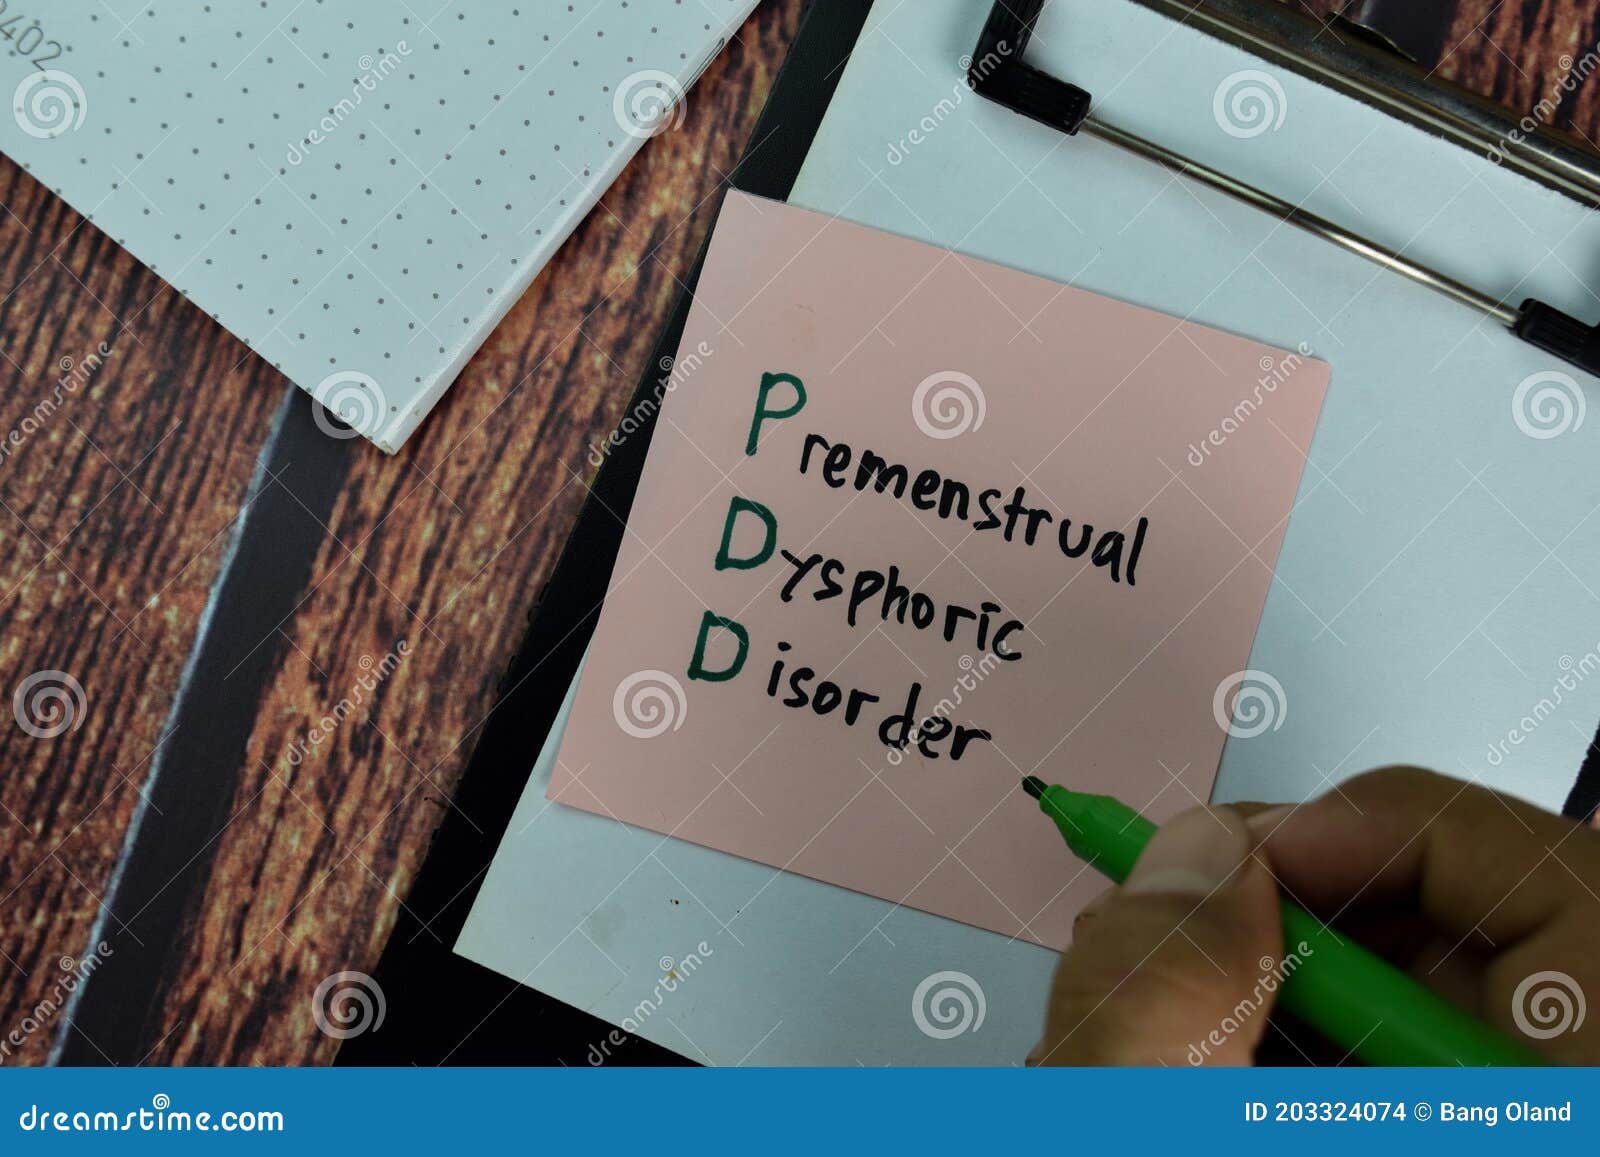 PDD - Premenstrual Dysphoric Disorder Write on Sticky Notes